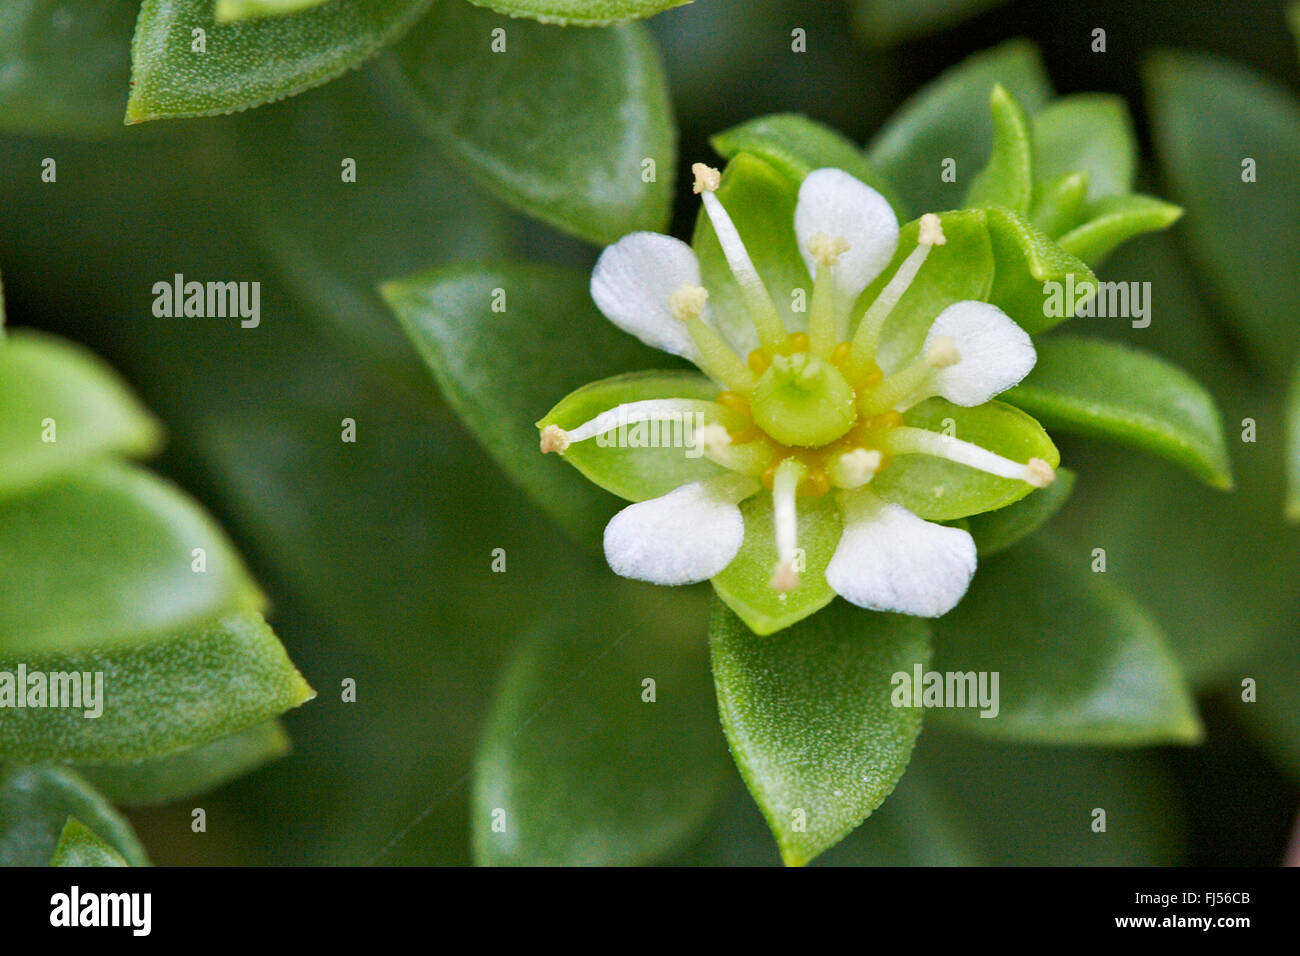 Flor nacional de dinamarca fotografías e imágenes de alta resolución - Alamy